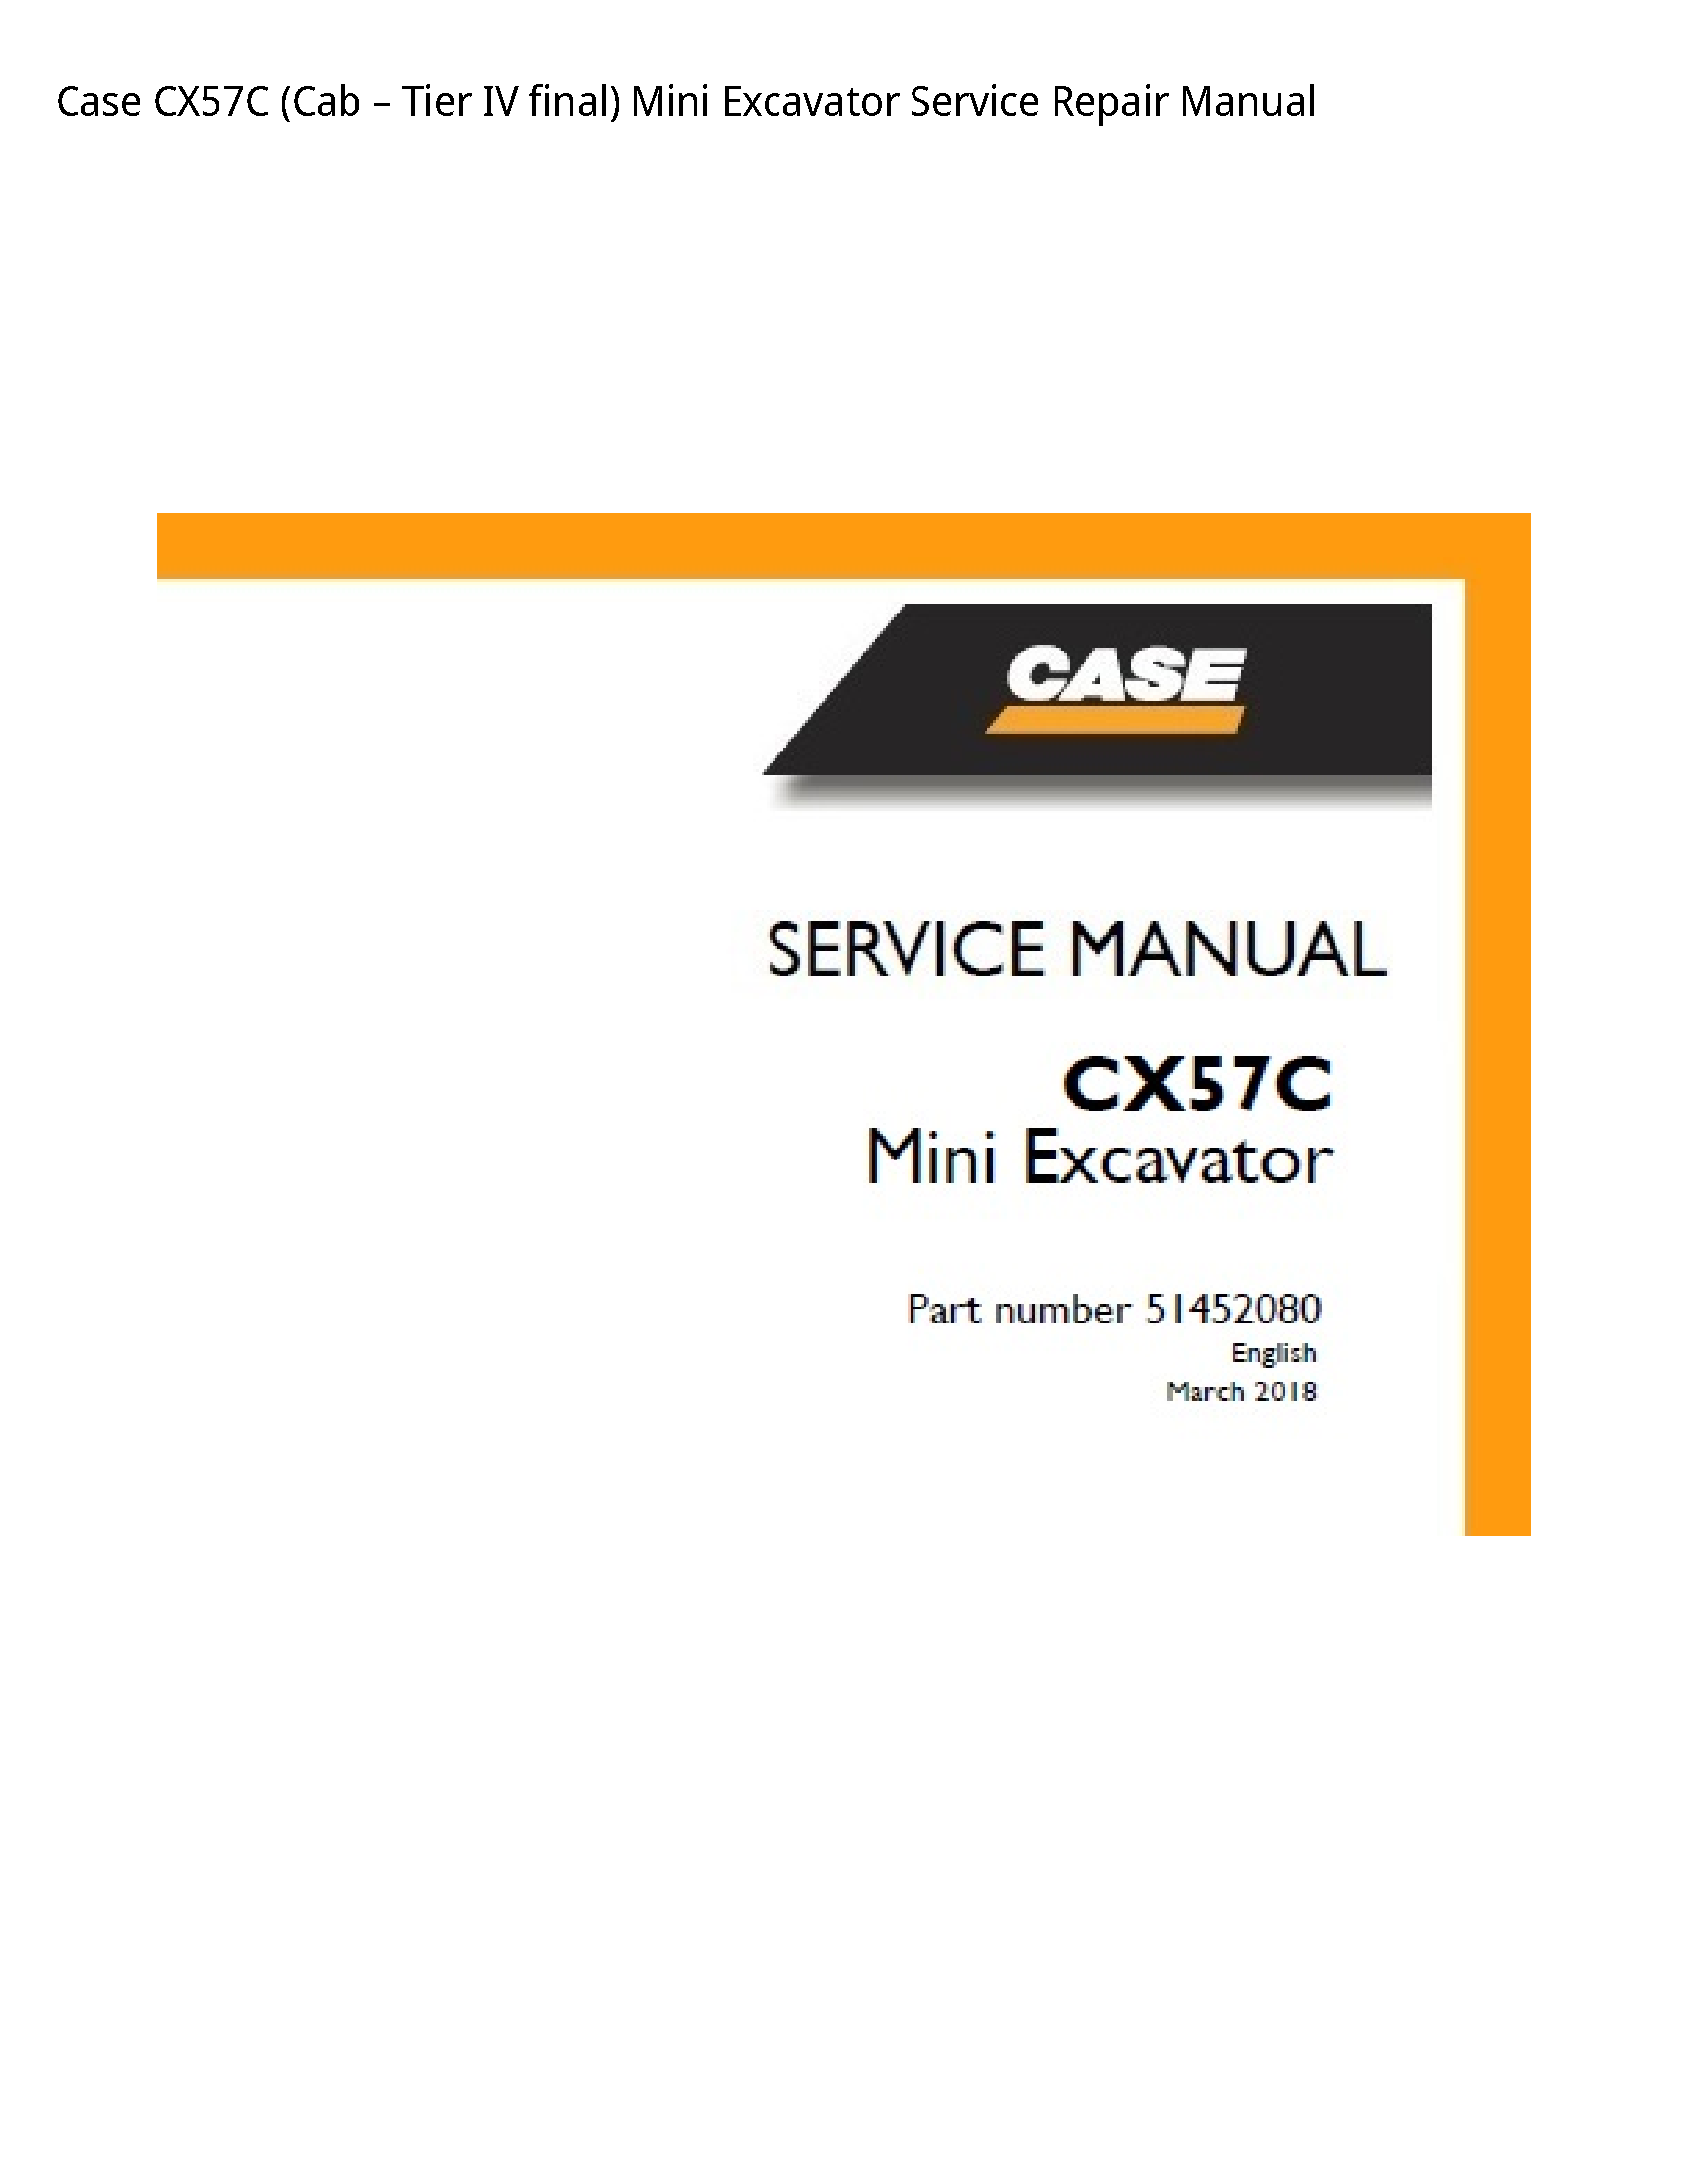 Case/Case IH CX57C (Cab Tier IV final) Mini Excavator manual